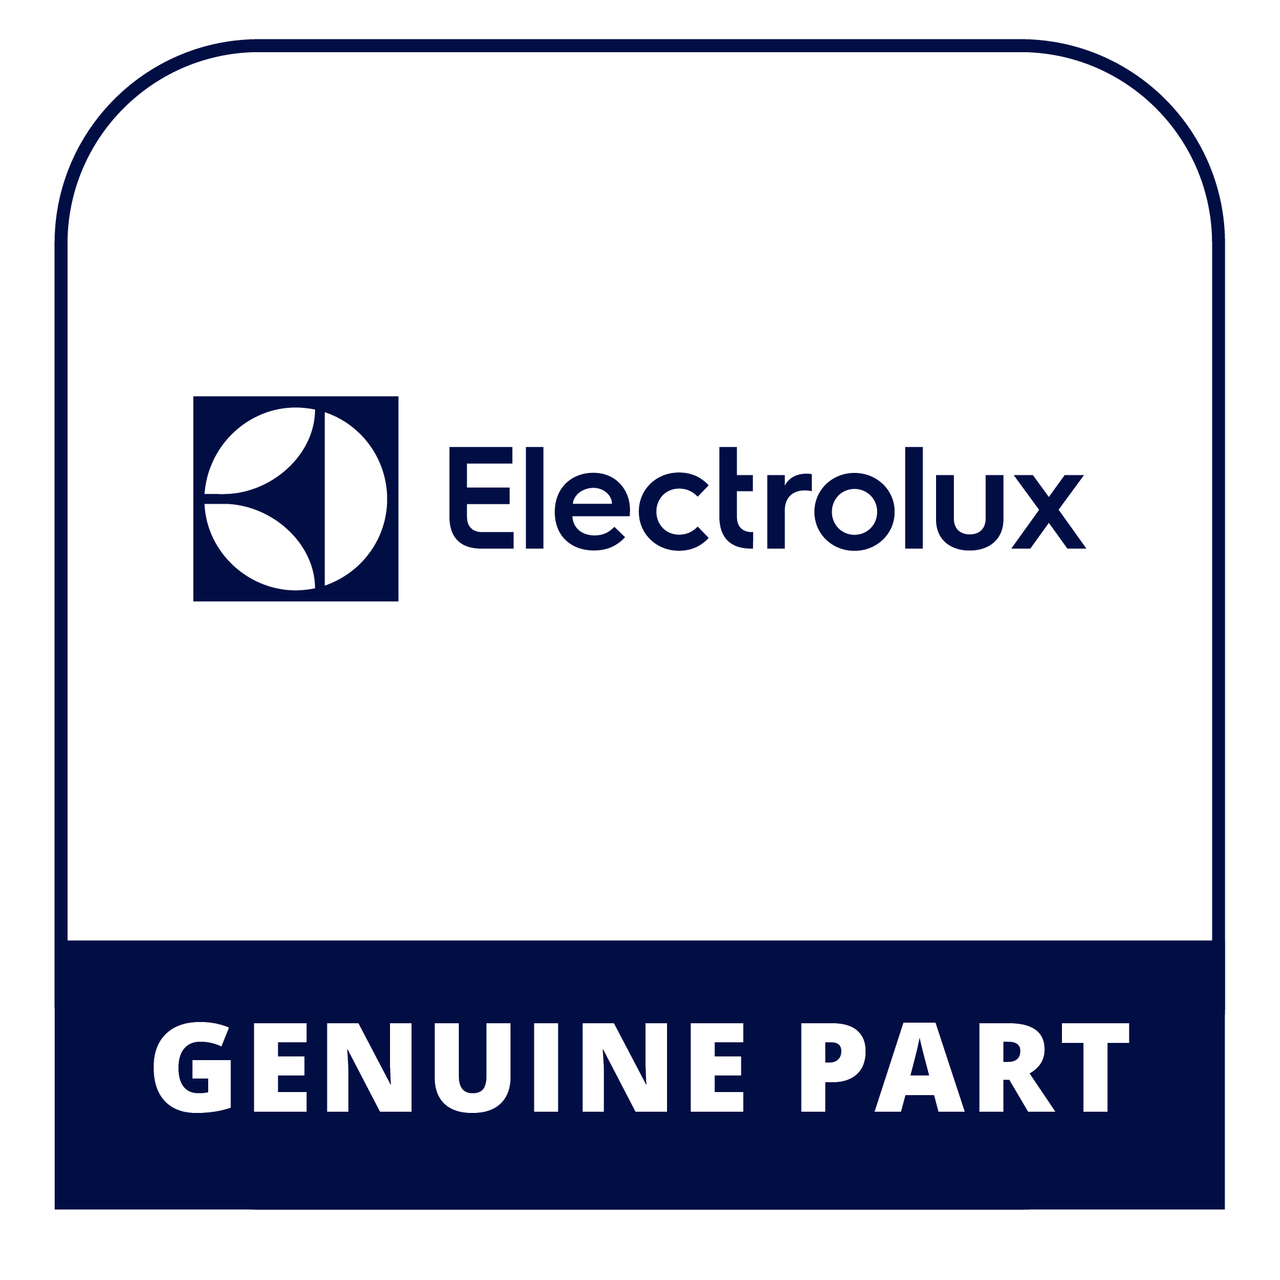 Frigidaire - Electrolux 5304492064 Control Panel - Genuine Electrolux Part